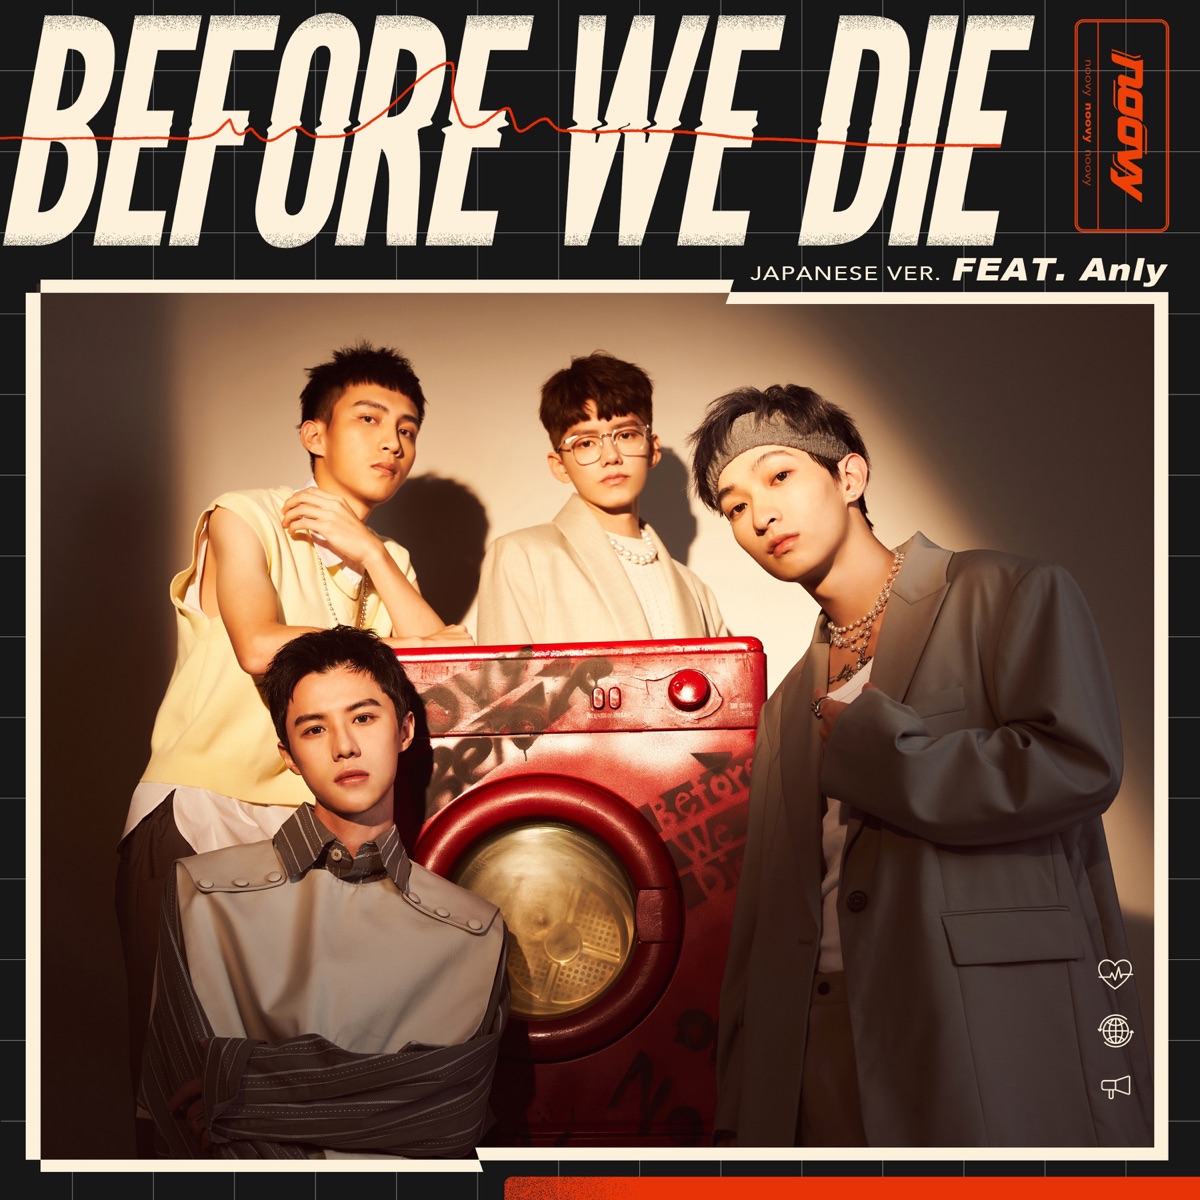 『noovy - Before We Die - Japanese ver. - (feat. Anly) 歌詞』収録の『Before We Die - Japanese ver. - (feat. Anly)』ジャケット